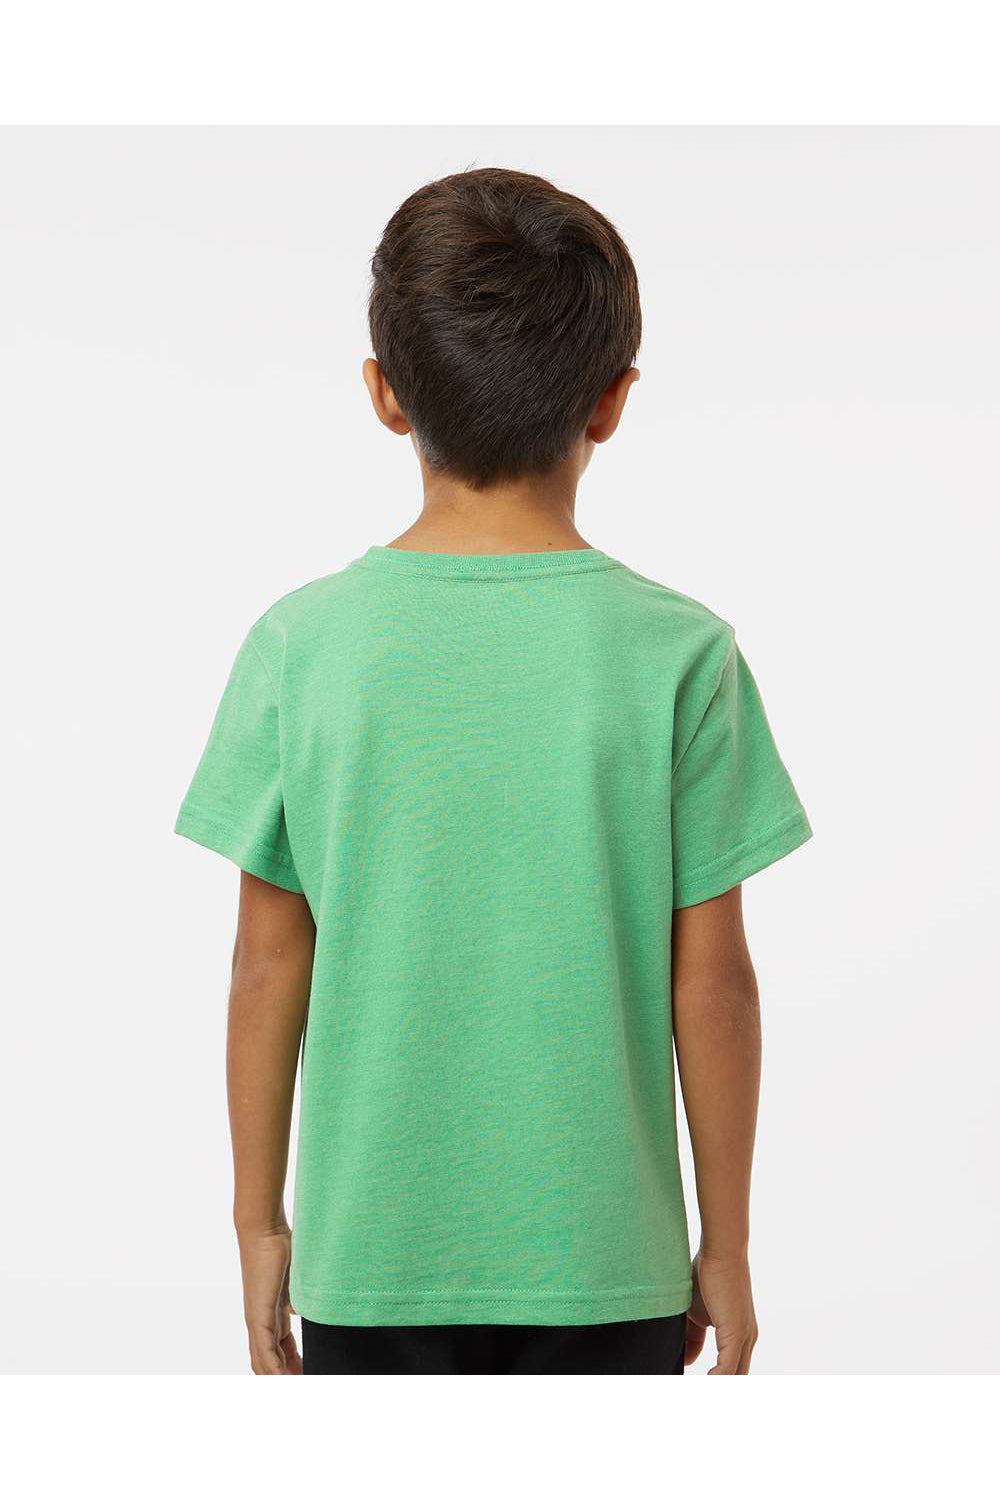 Kastlfel 2015 Youth RecycledSoft Short Sleeve Crewneck T-Shirt Green Model Back